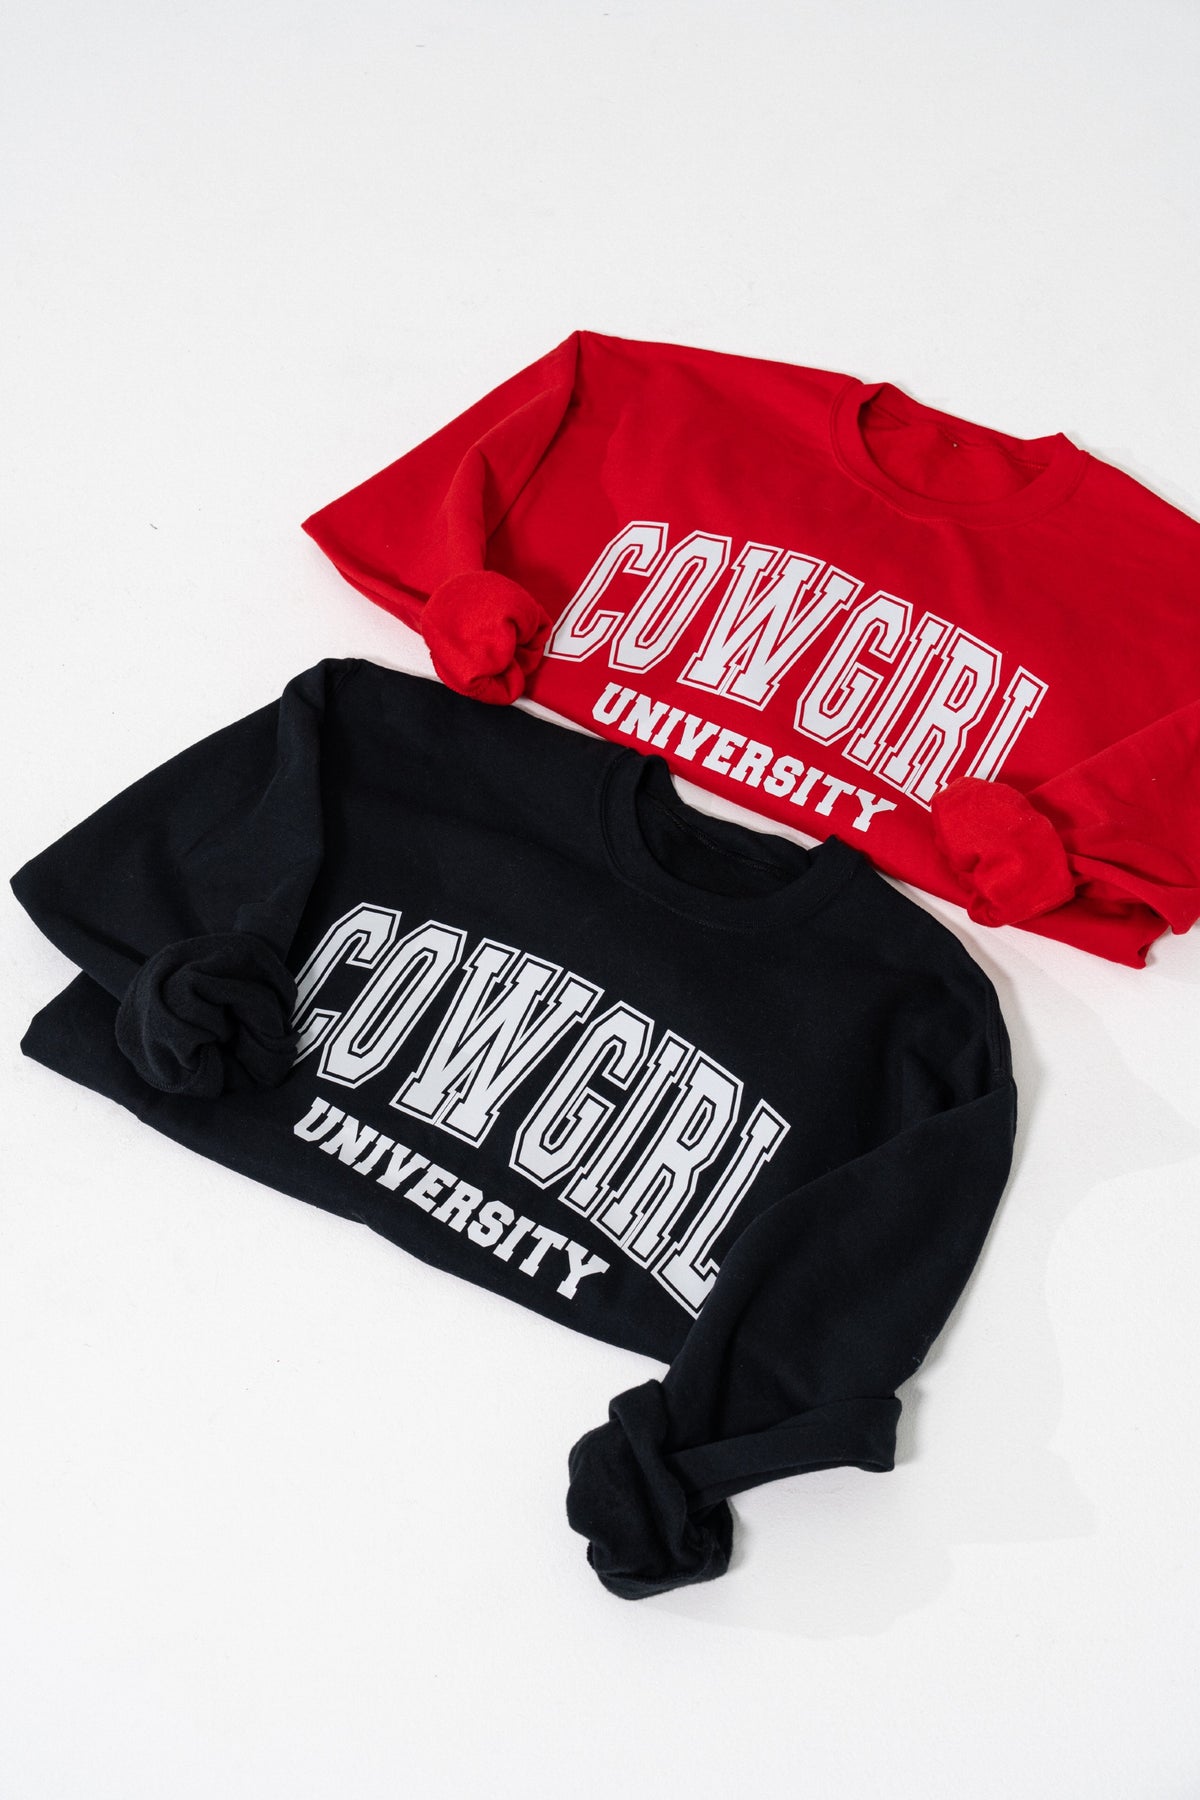 Cowgirl University Sweatshirt in Red